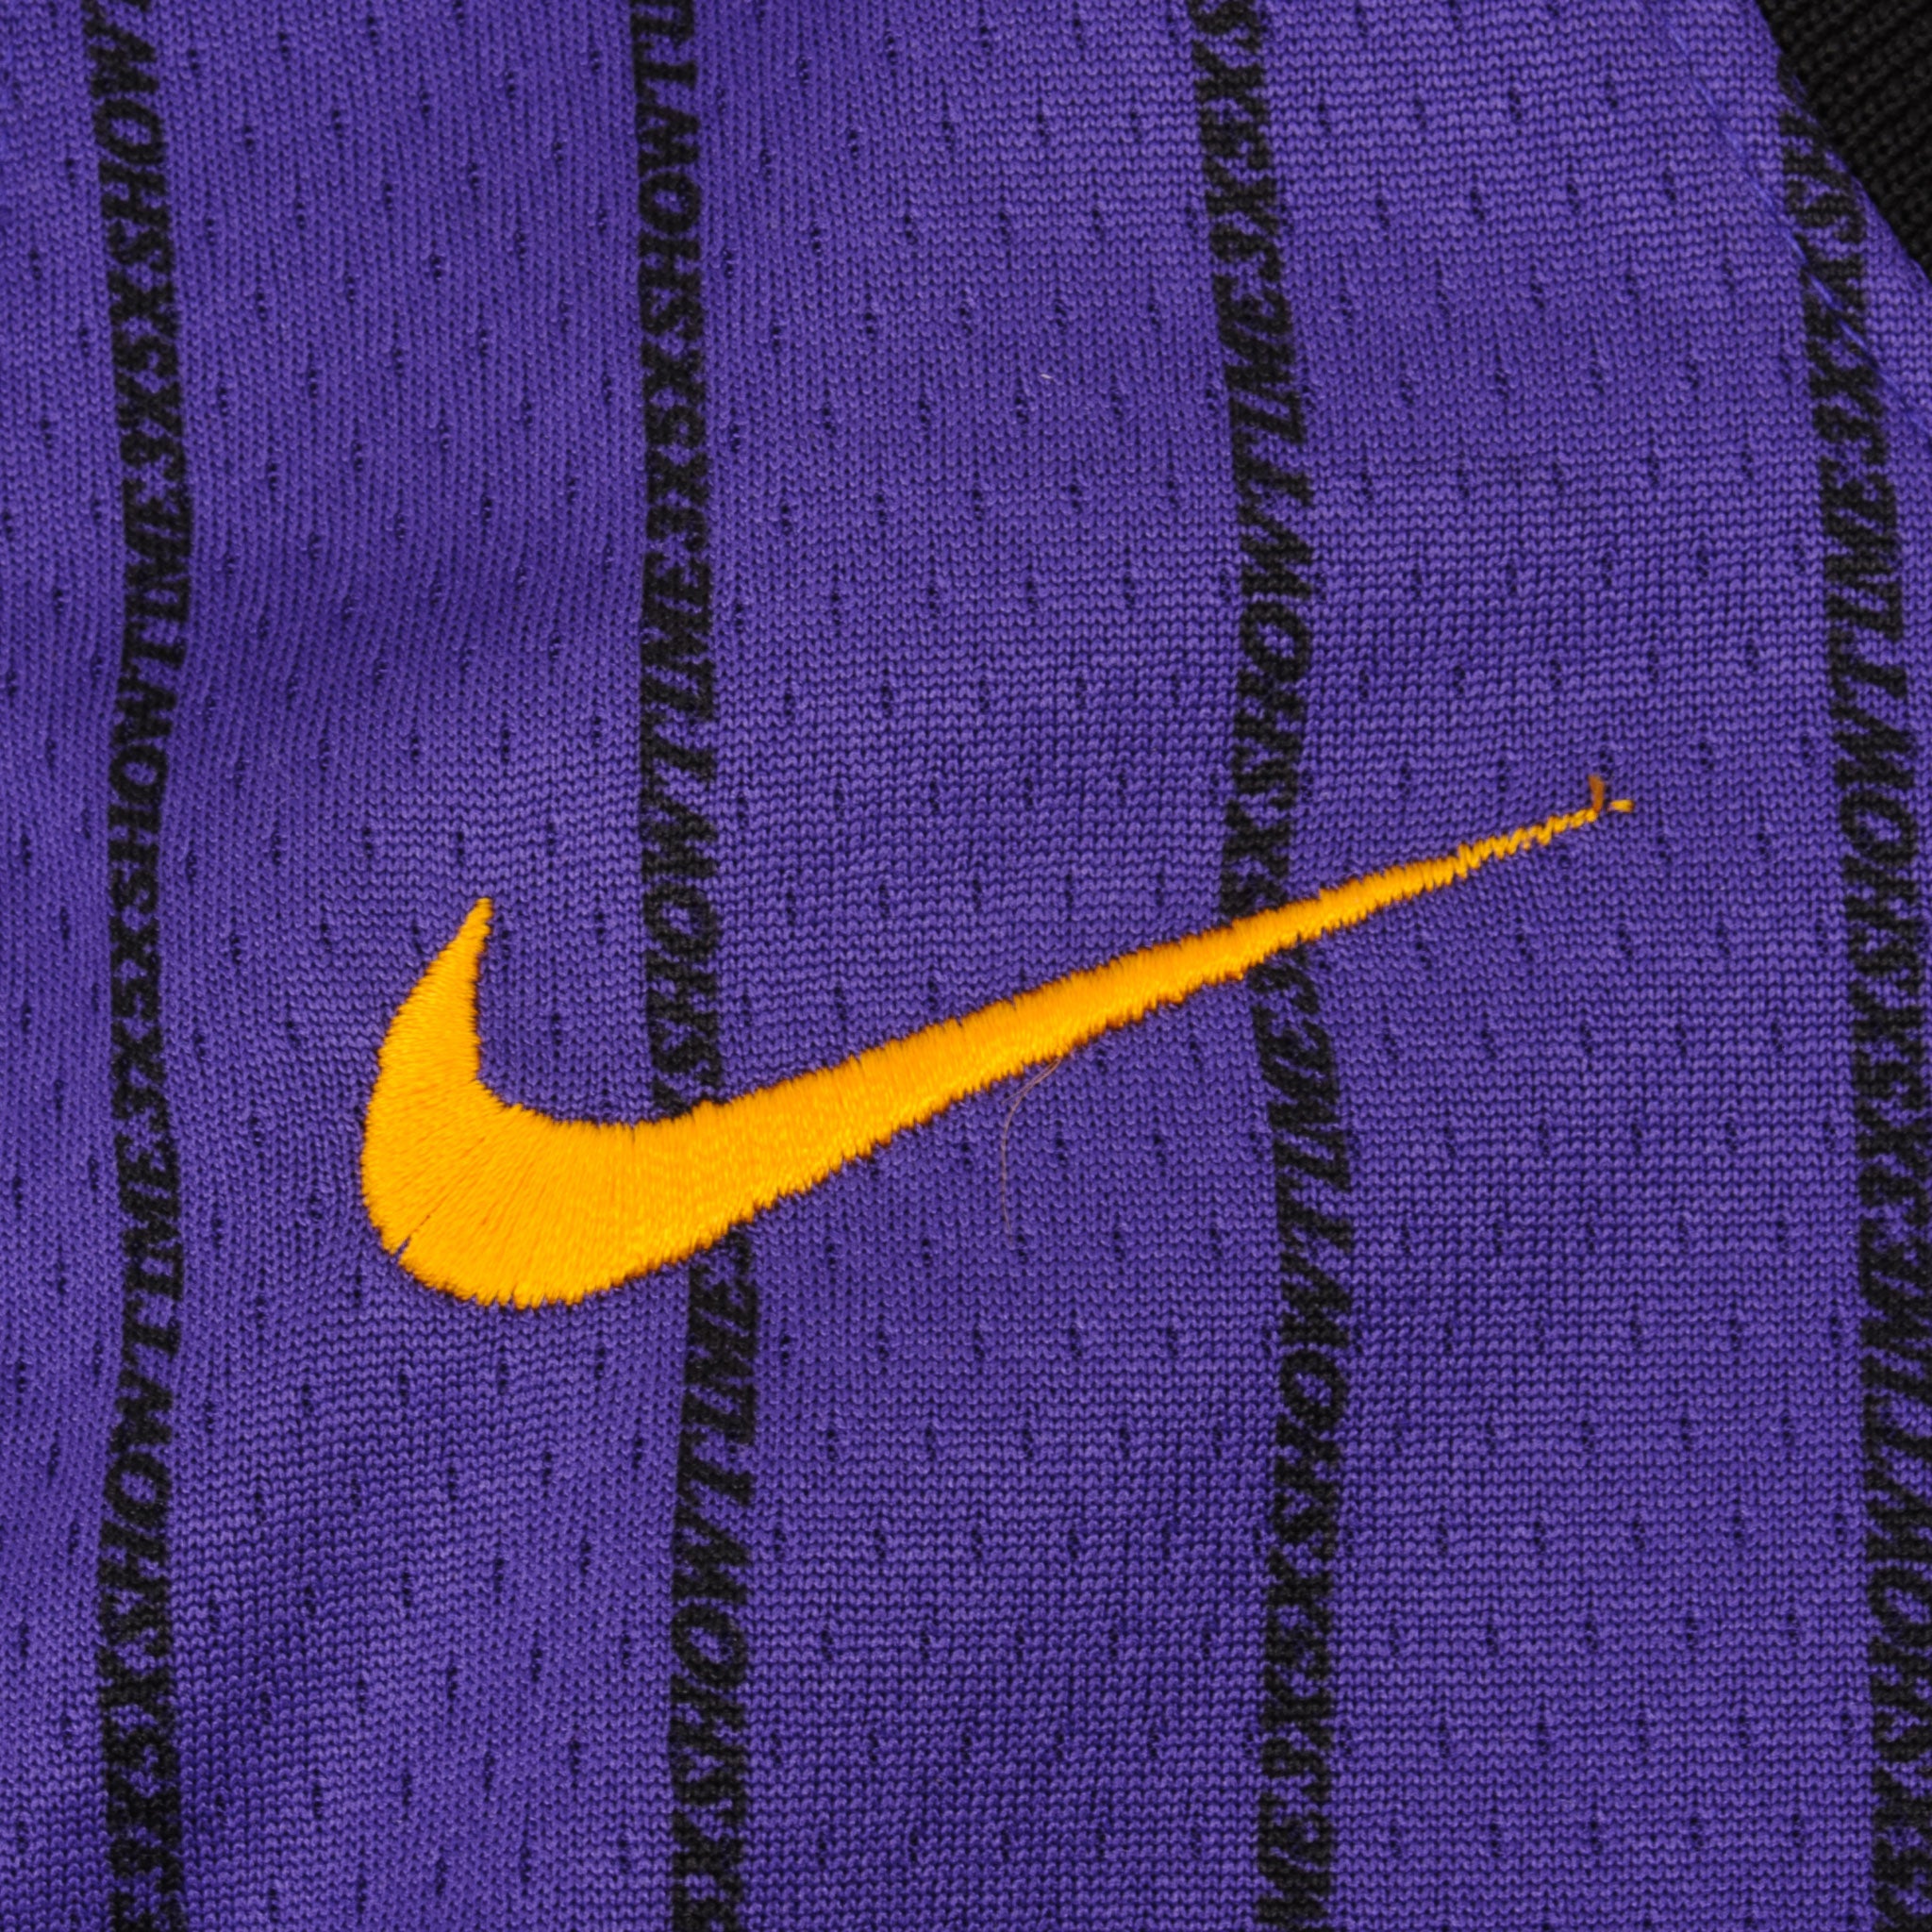 Authentic Nike Kobe Bryant Swingman Jersey #24 Retirement Limited Edition M  44